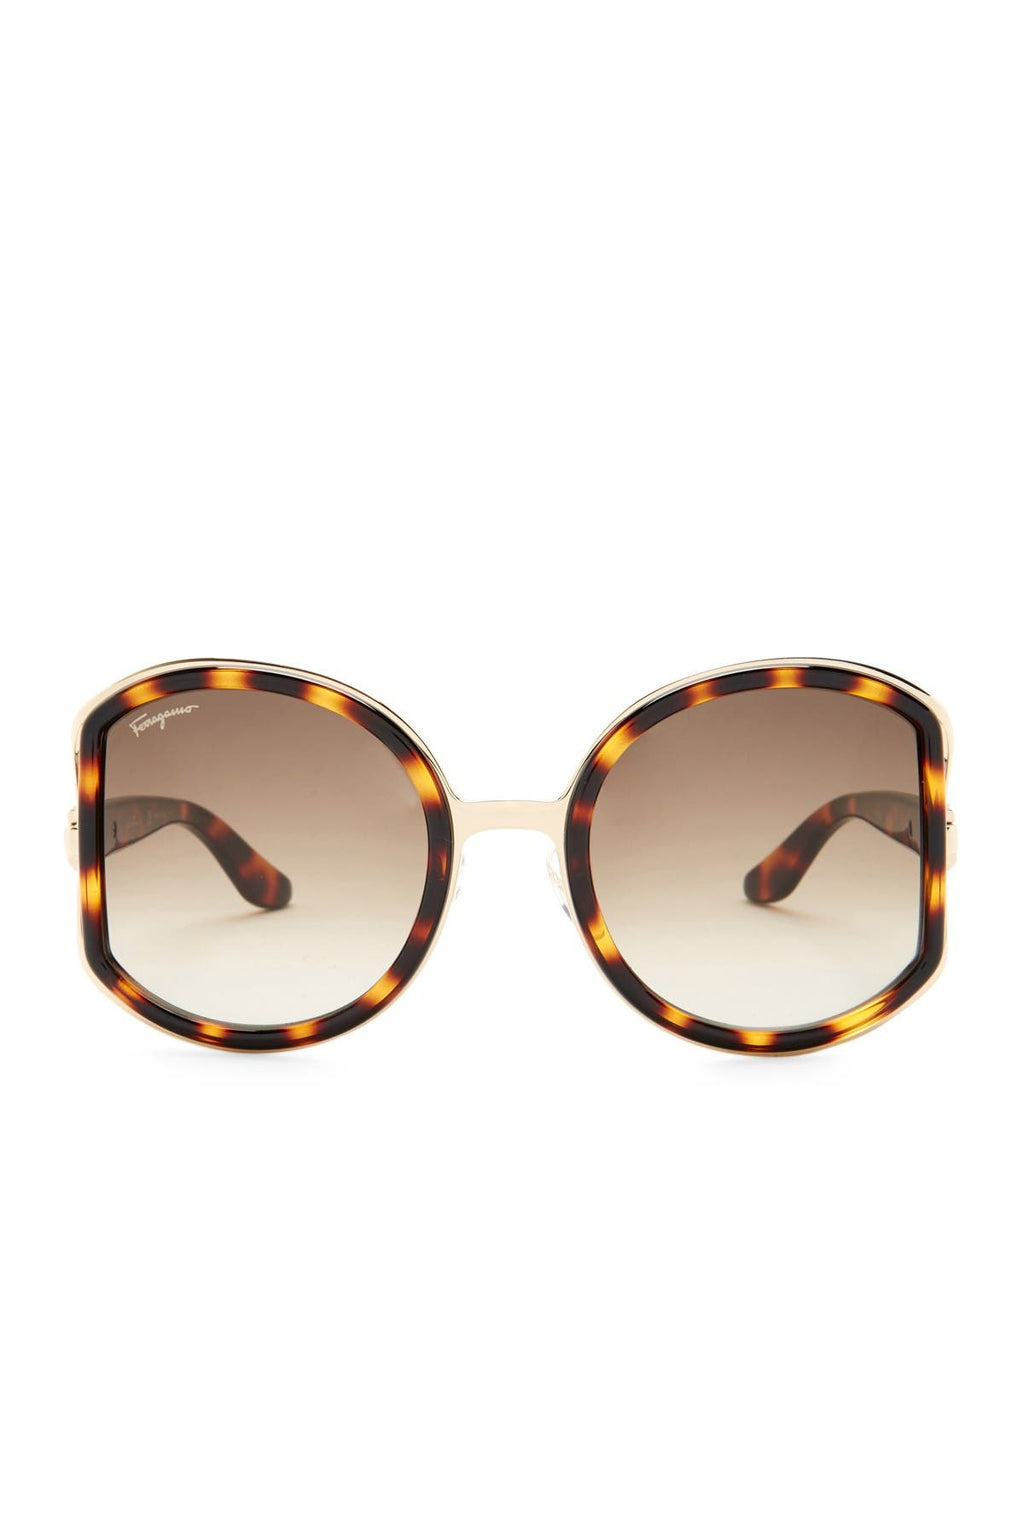 FERRAGAMO 52mm Oversized Sunglasses, Main, color, DARK TORTOISE